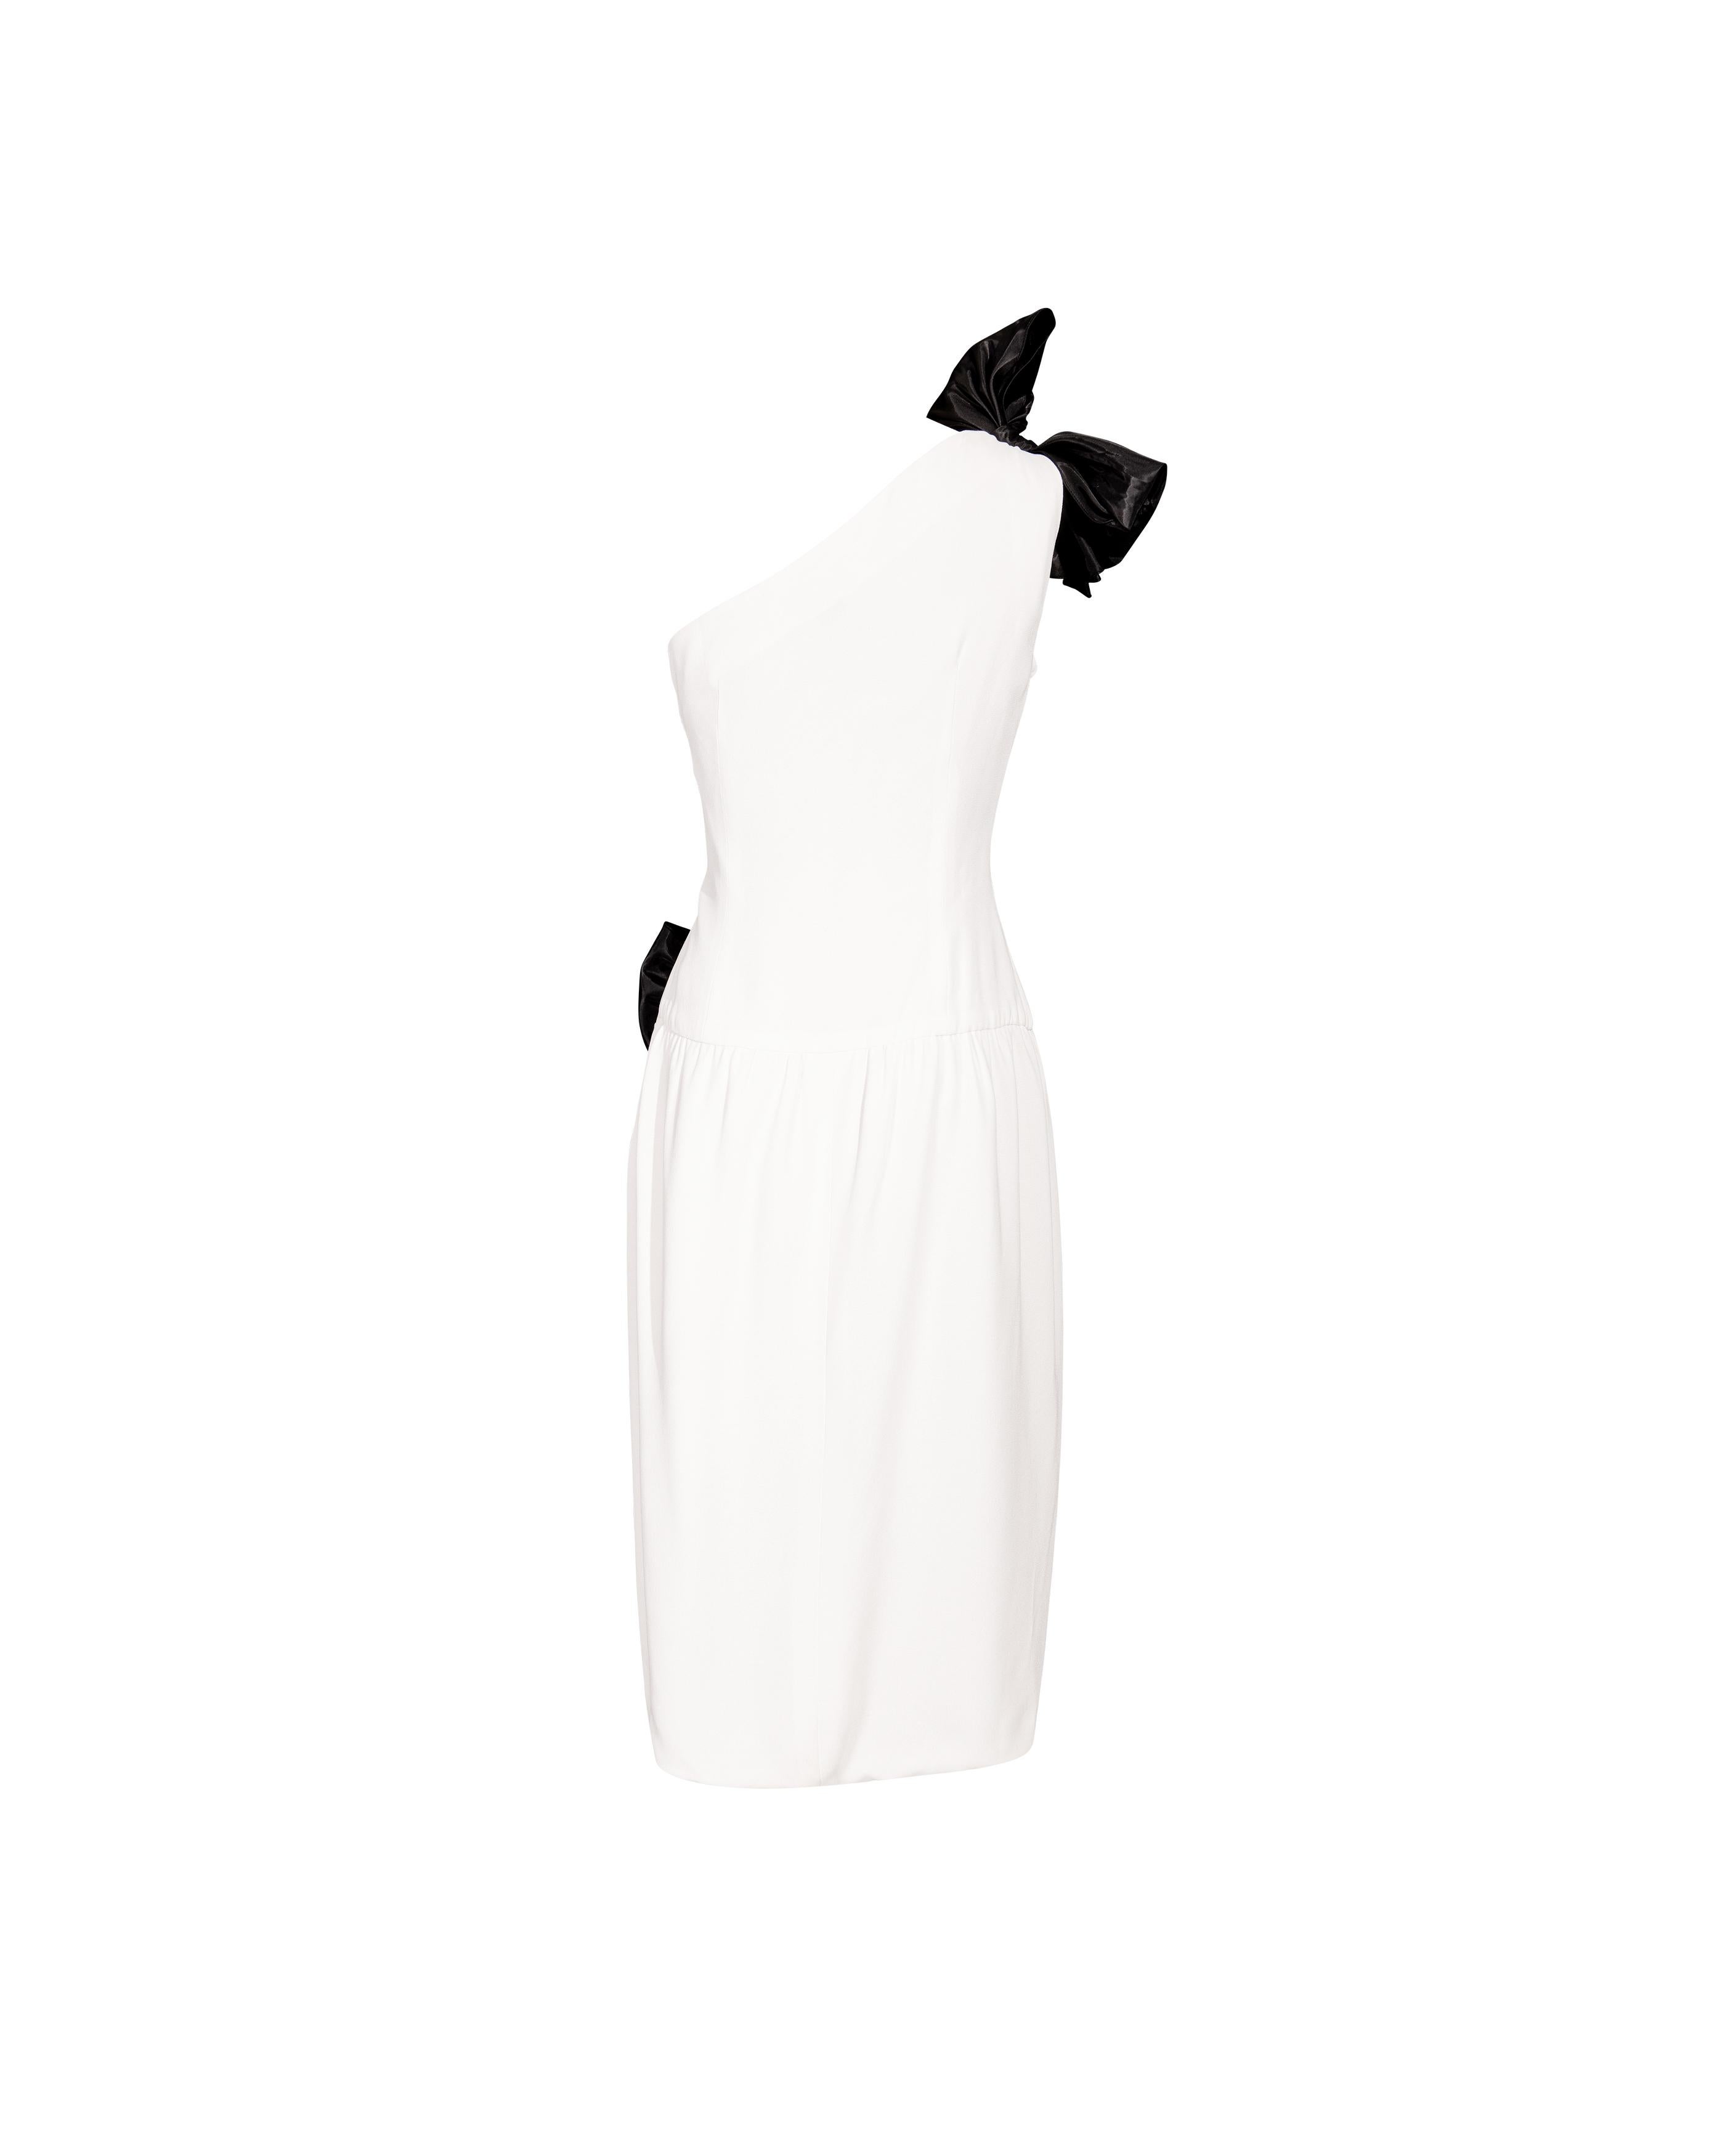 Women's 1983 Oscar de la Renta White Asymmetrical Above-Knee Dress with Bows For Sale